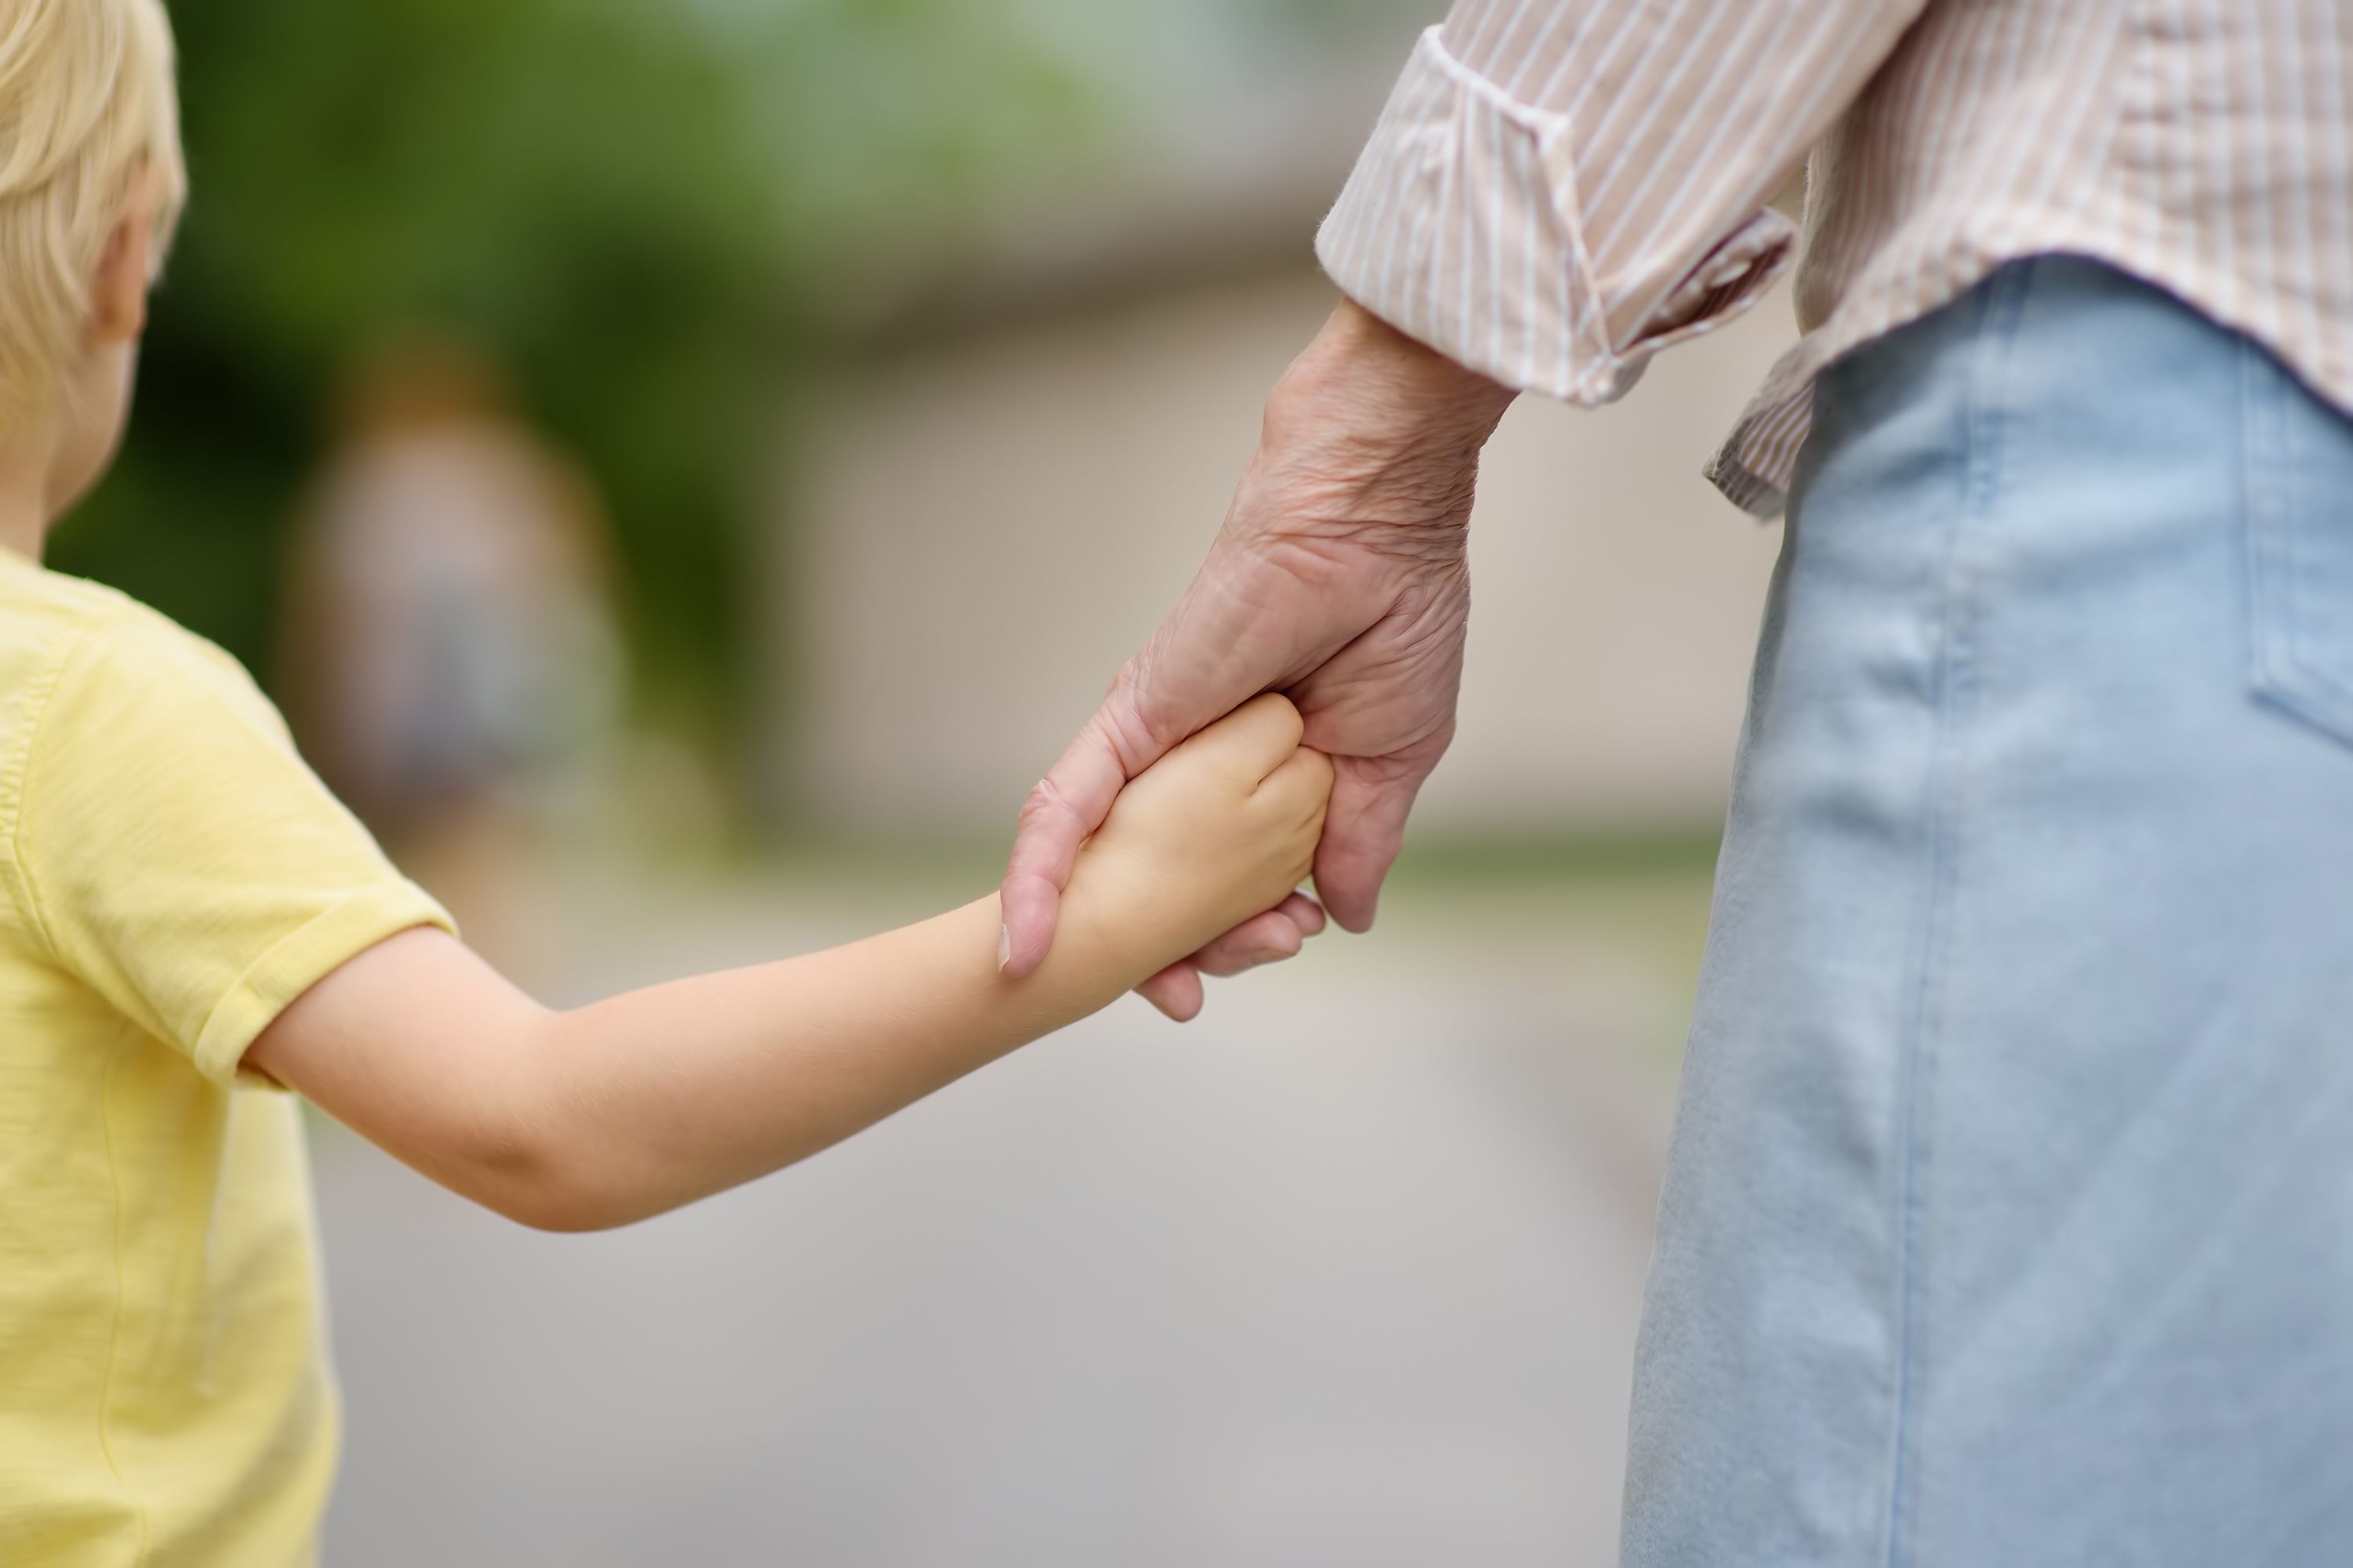 Study: Grandmas Feel More Affection for Grandkids Than Their Own Kids